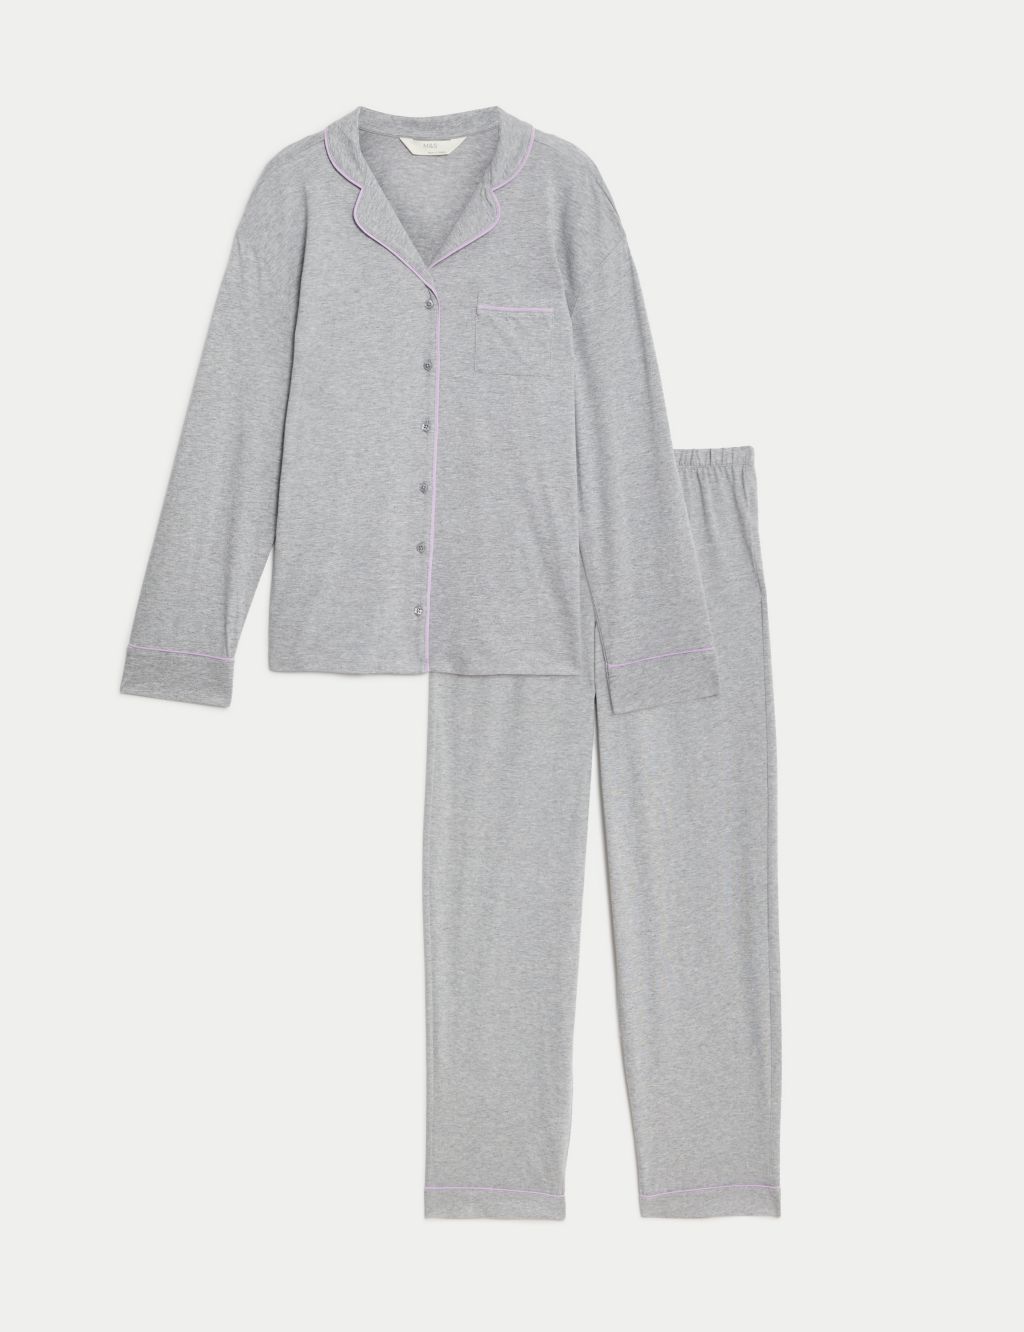 Cool Comfort™ Modal Pyjama image 2